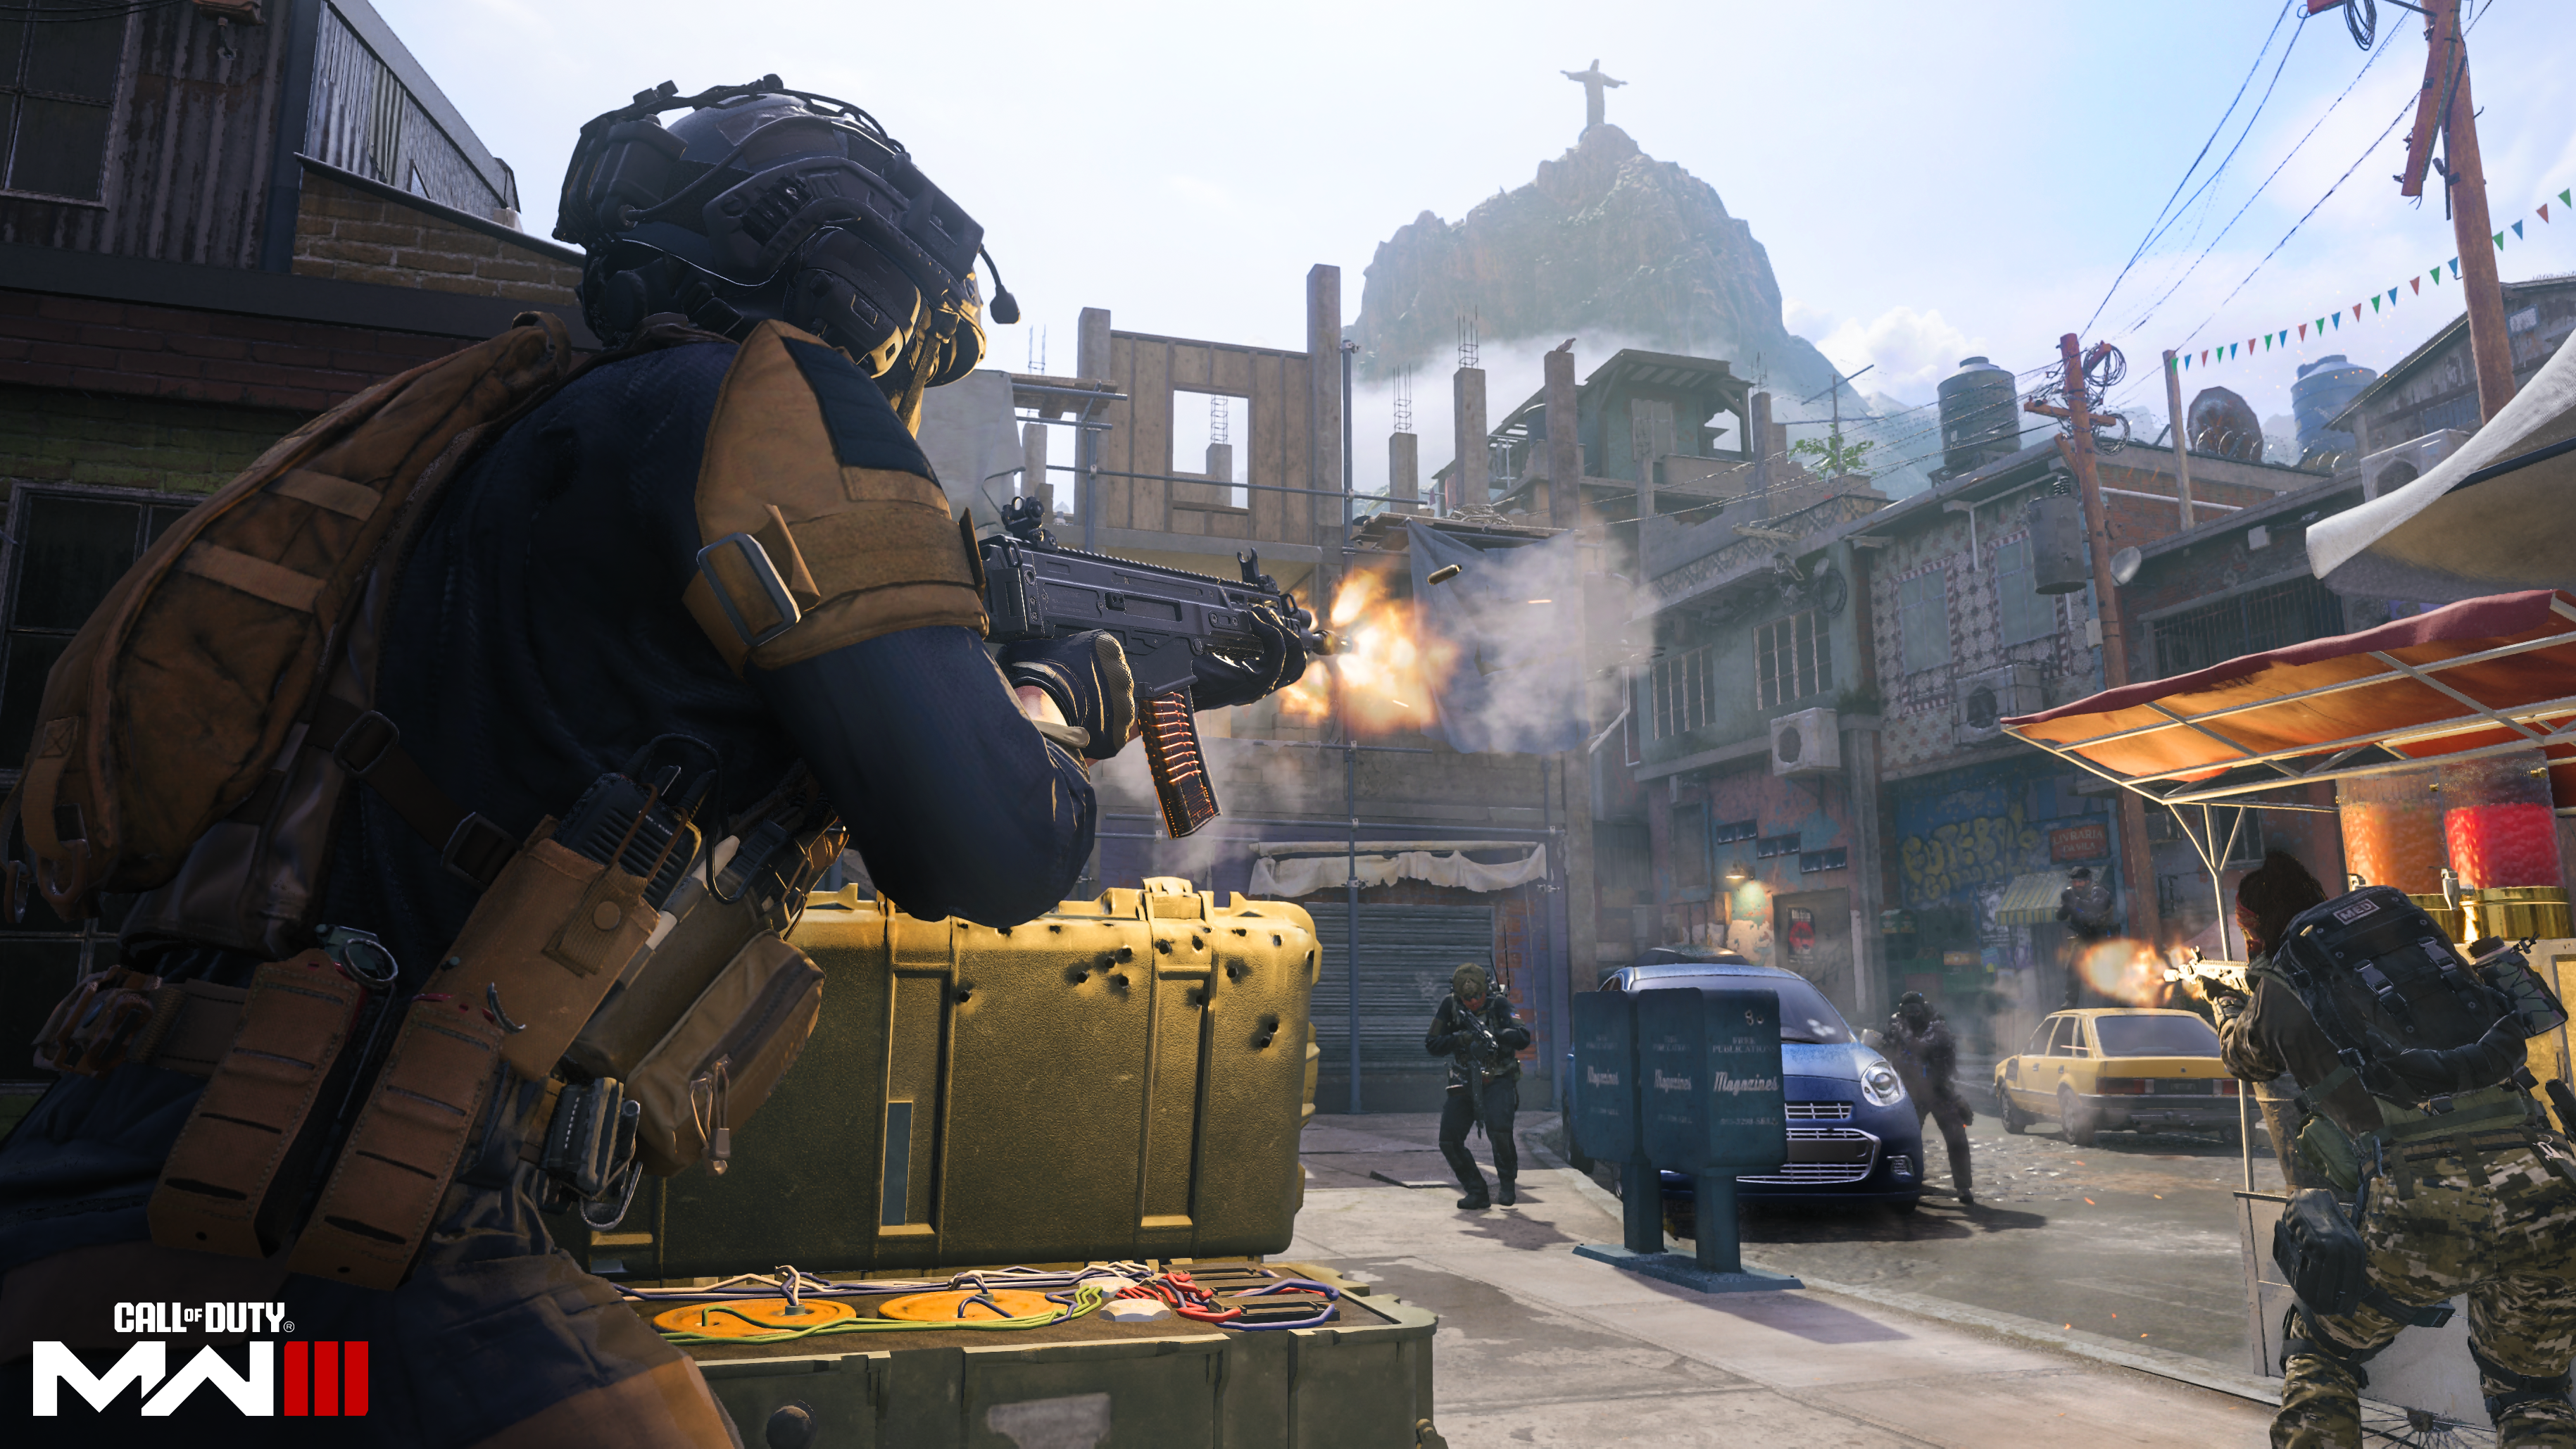 Call of Duty: Modern Warfare 3 Gets New Multiplayer Trailer